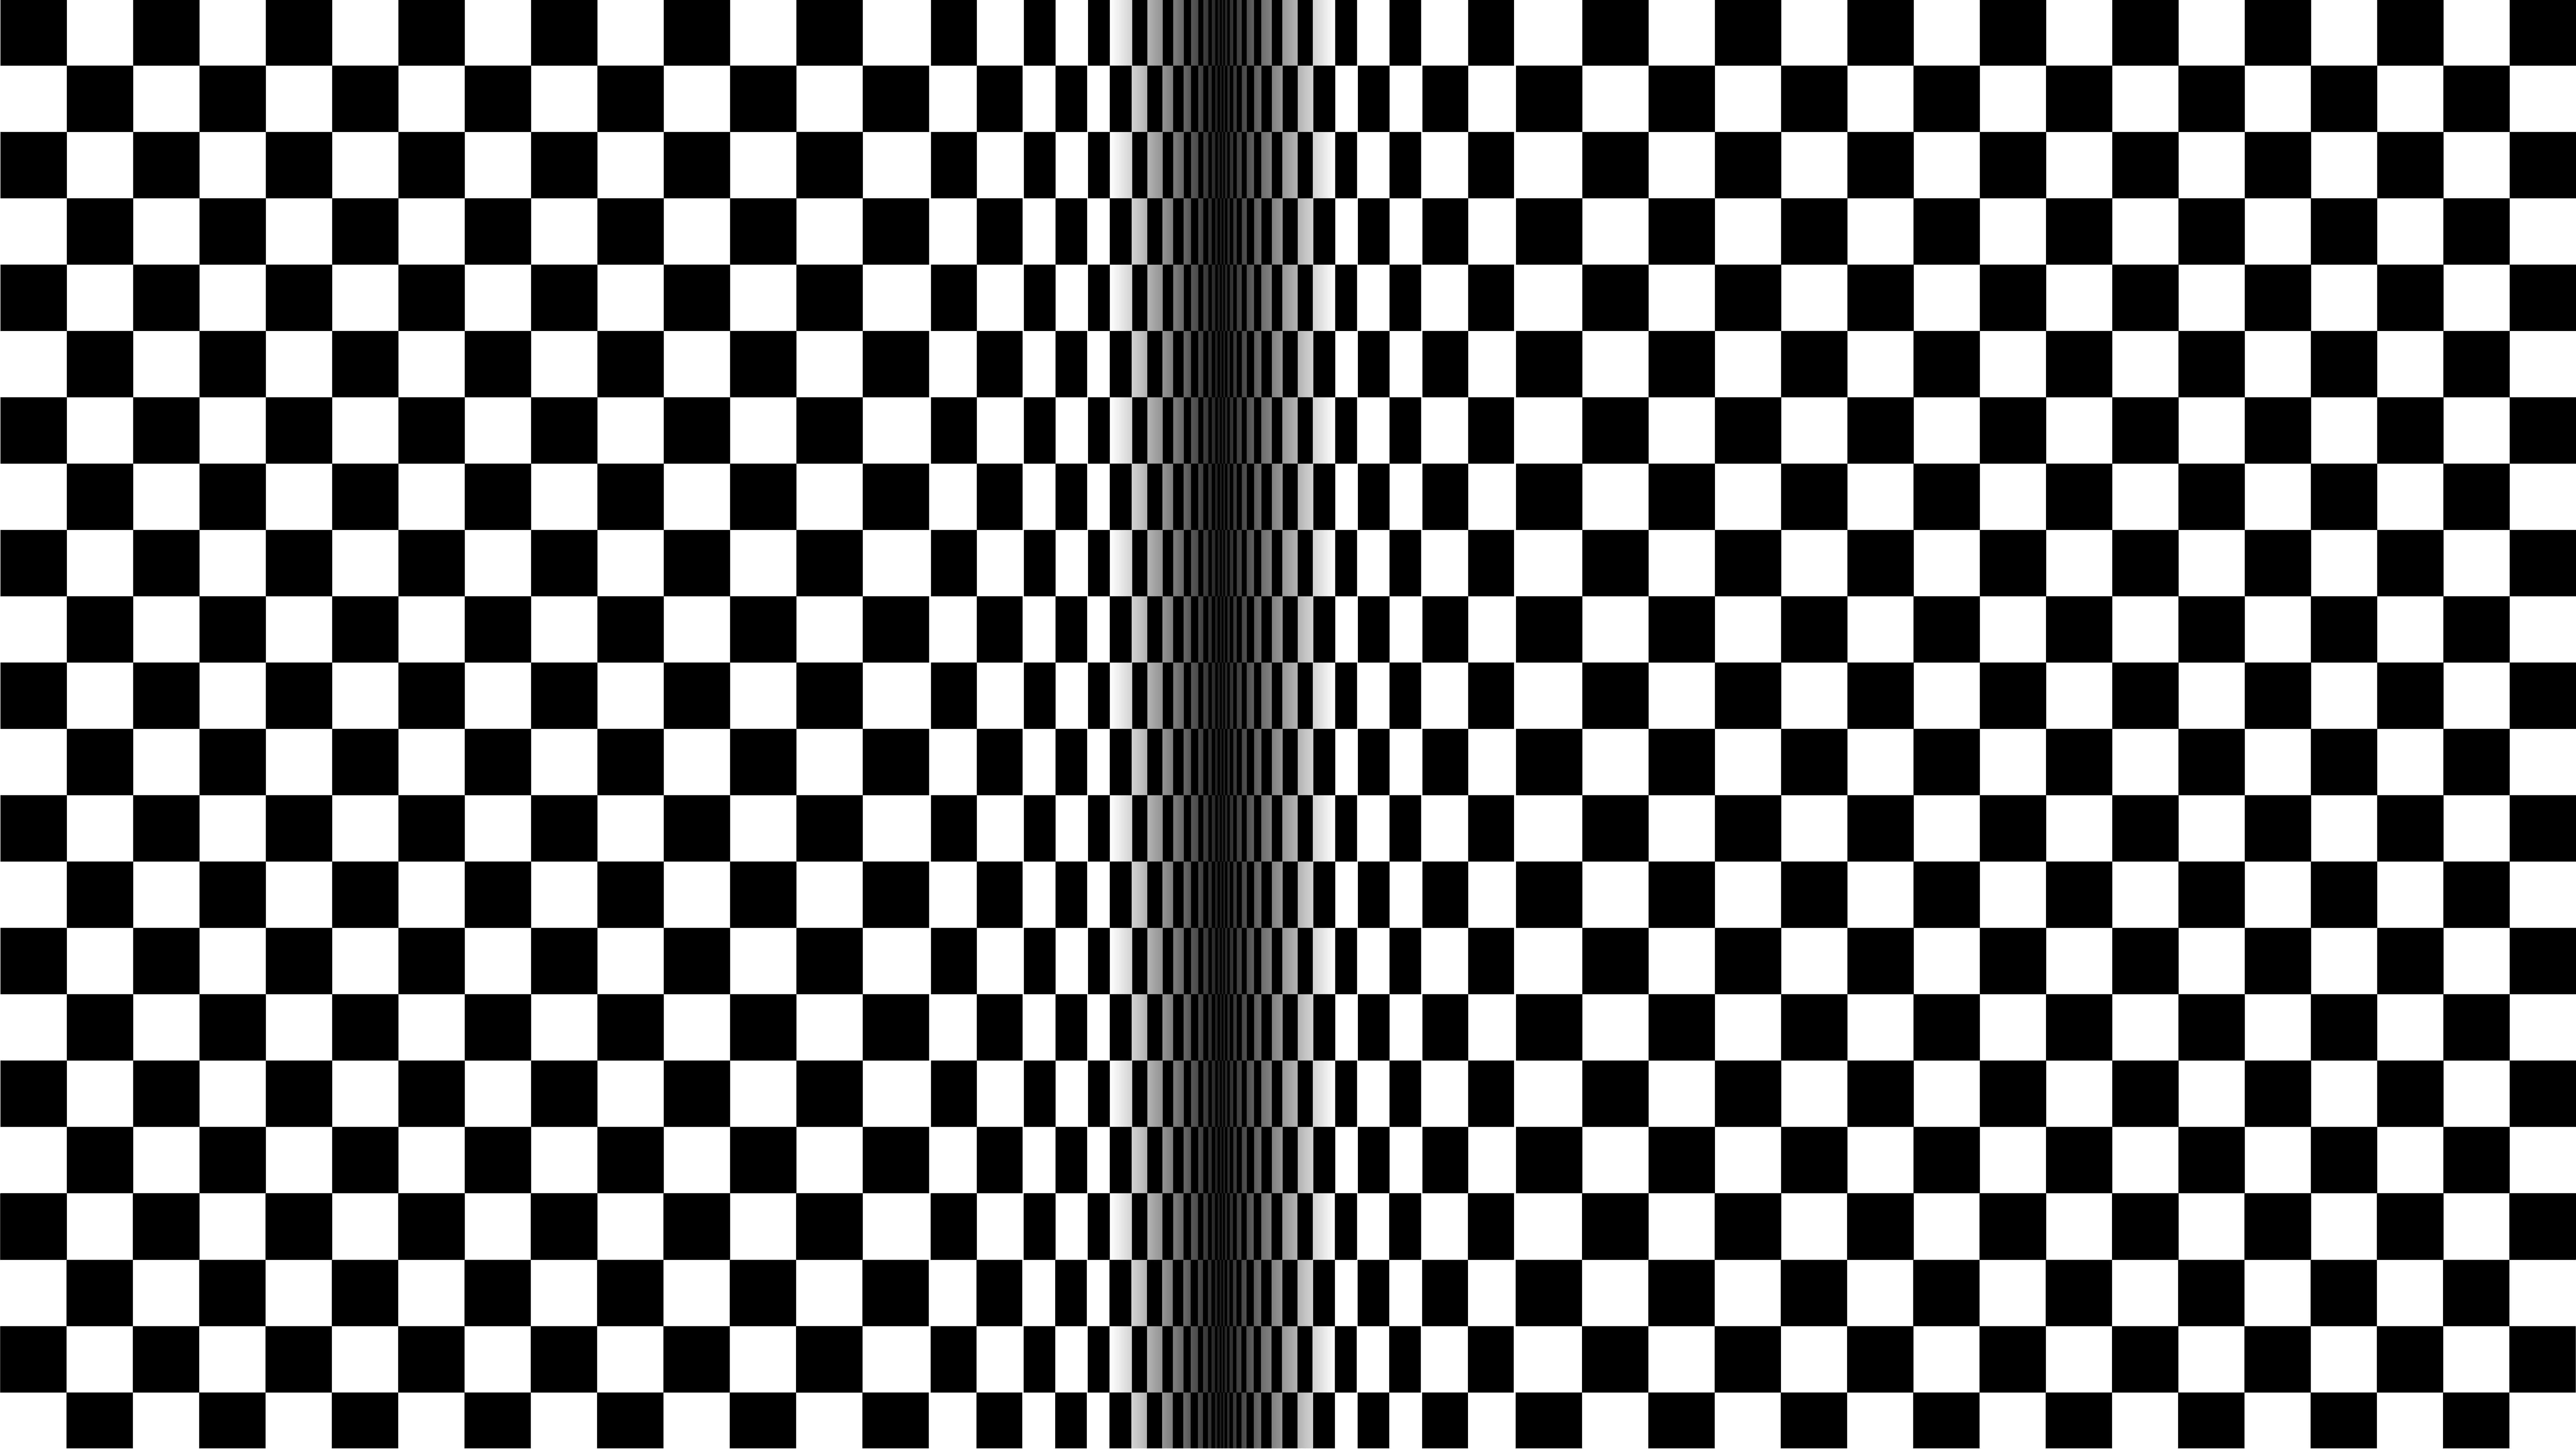 General 8000x4500 optical illusion optical art black white